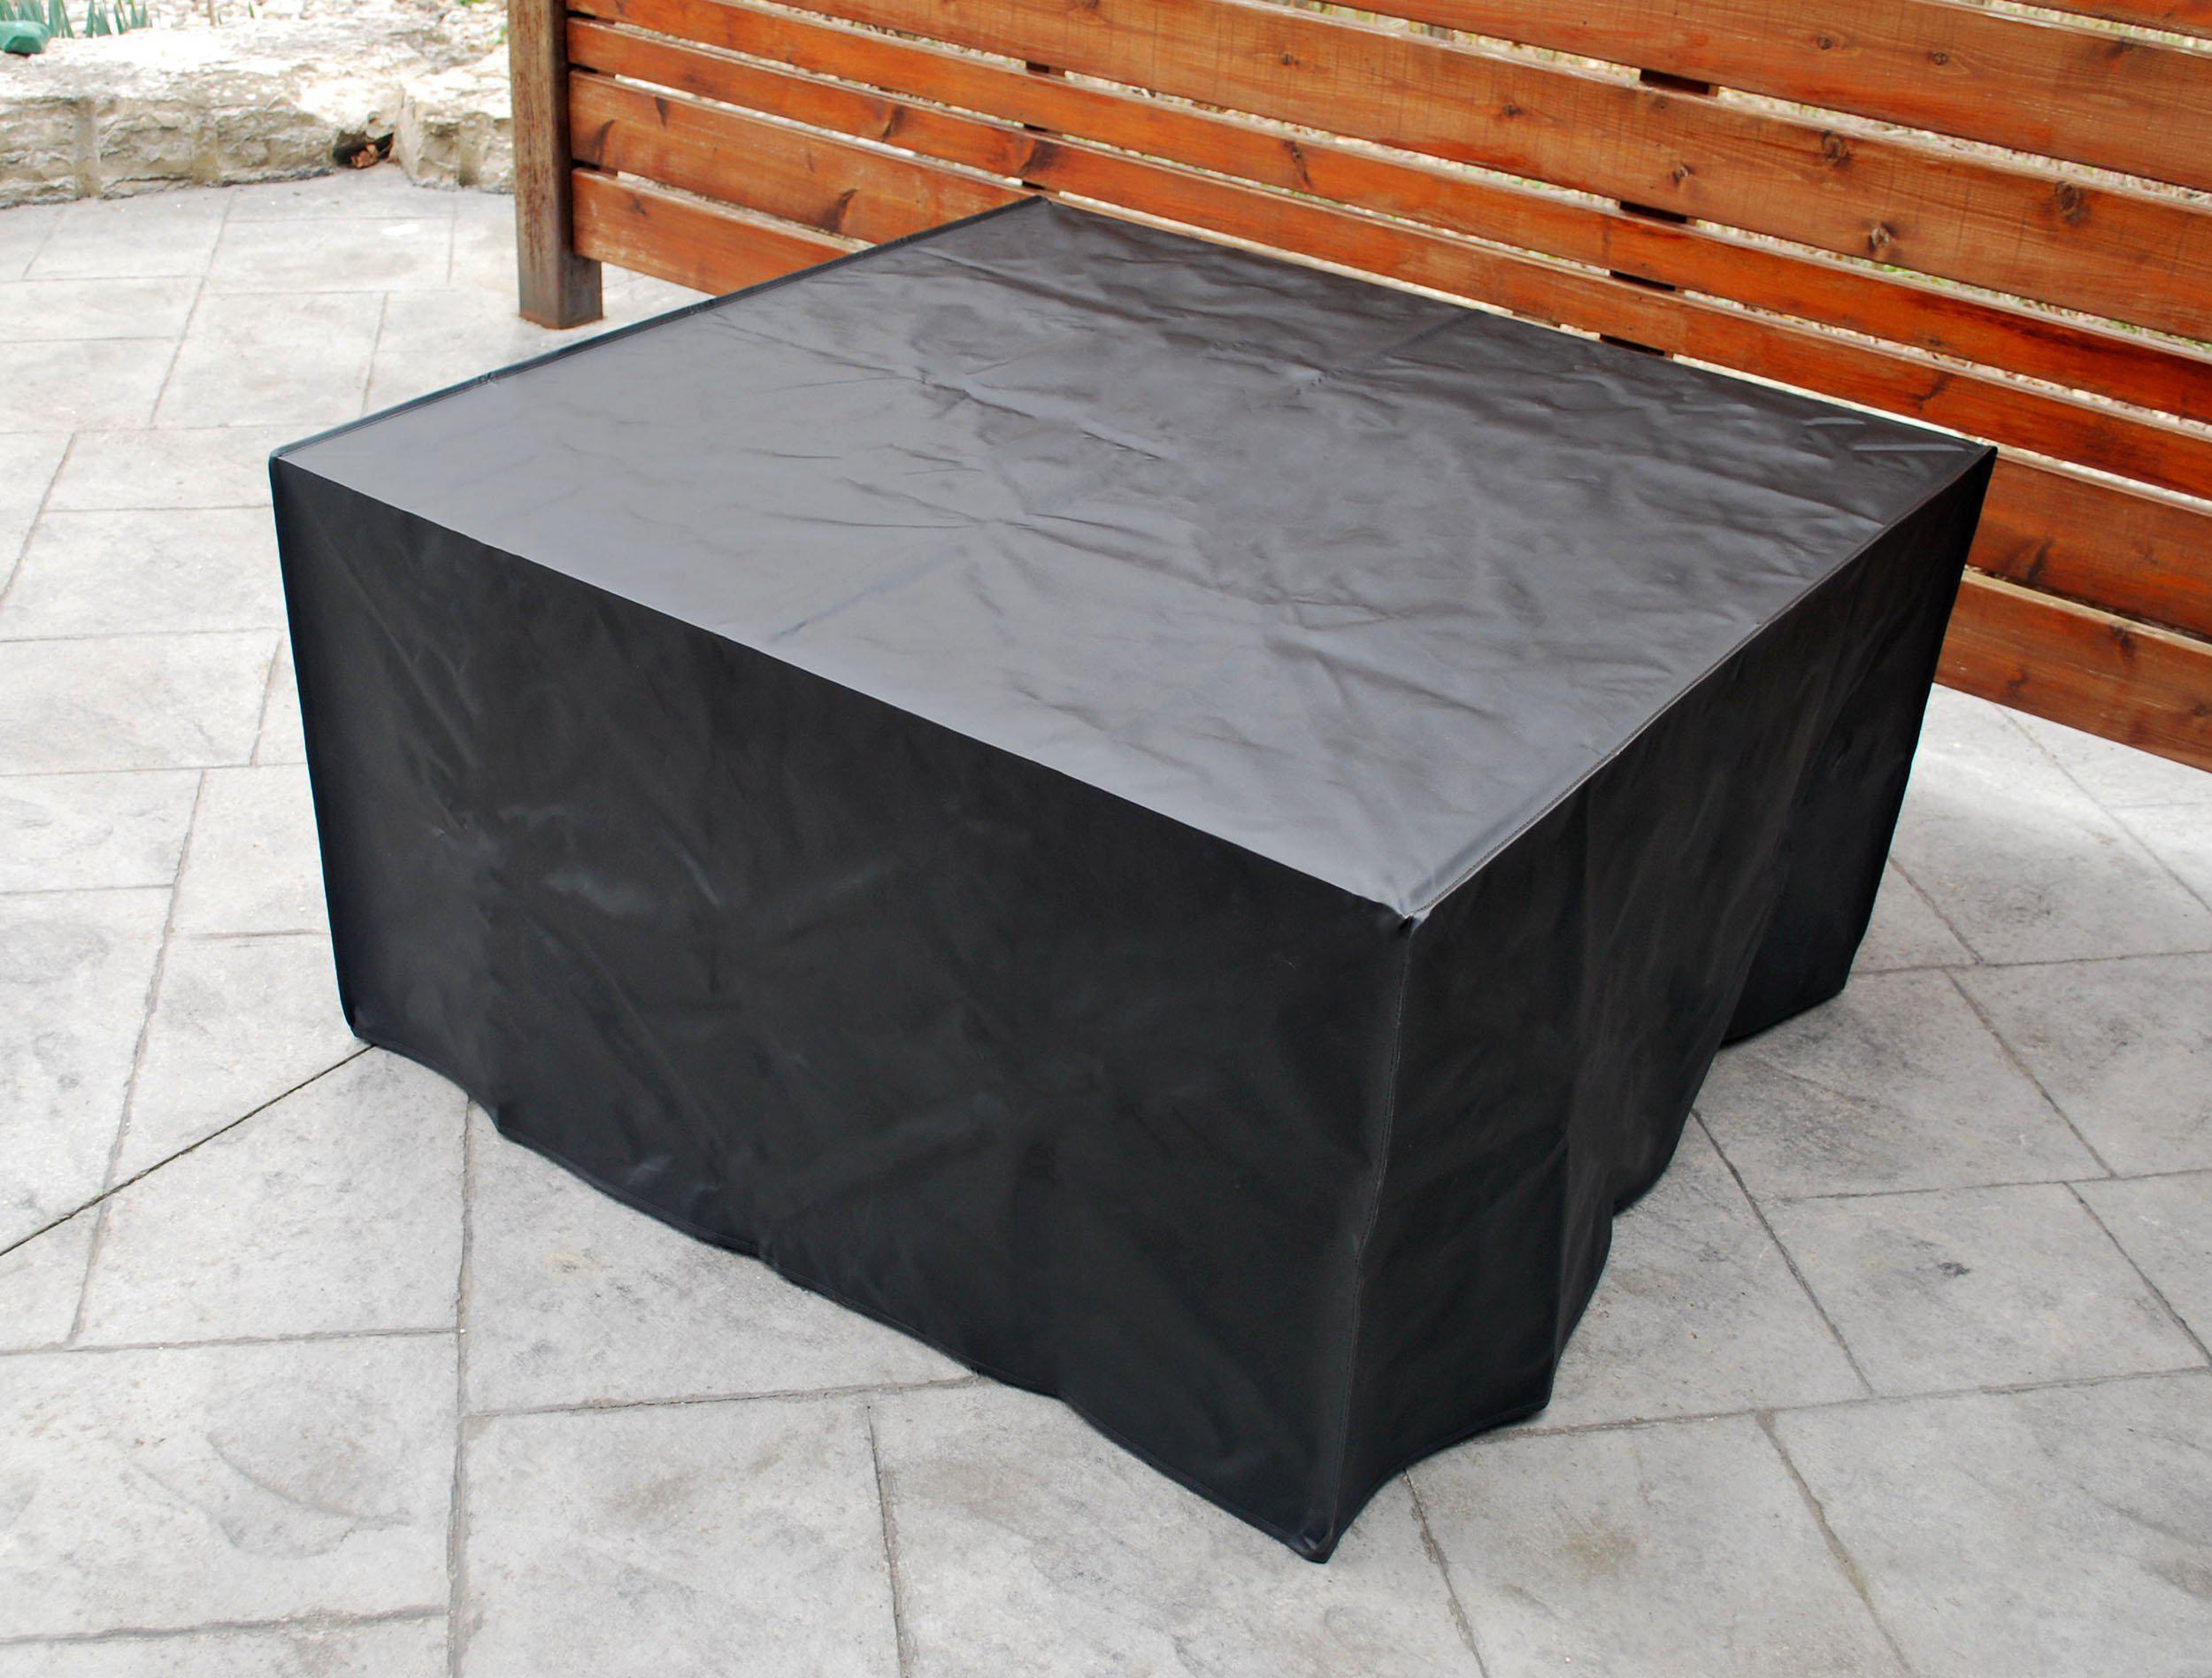 Eden Square Aluminum Fire Table 42" x 42" - Black Finish